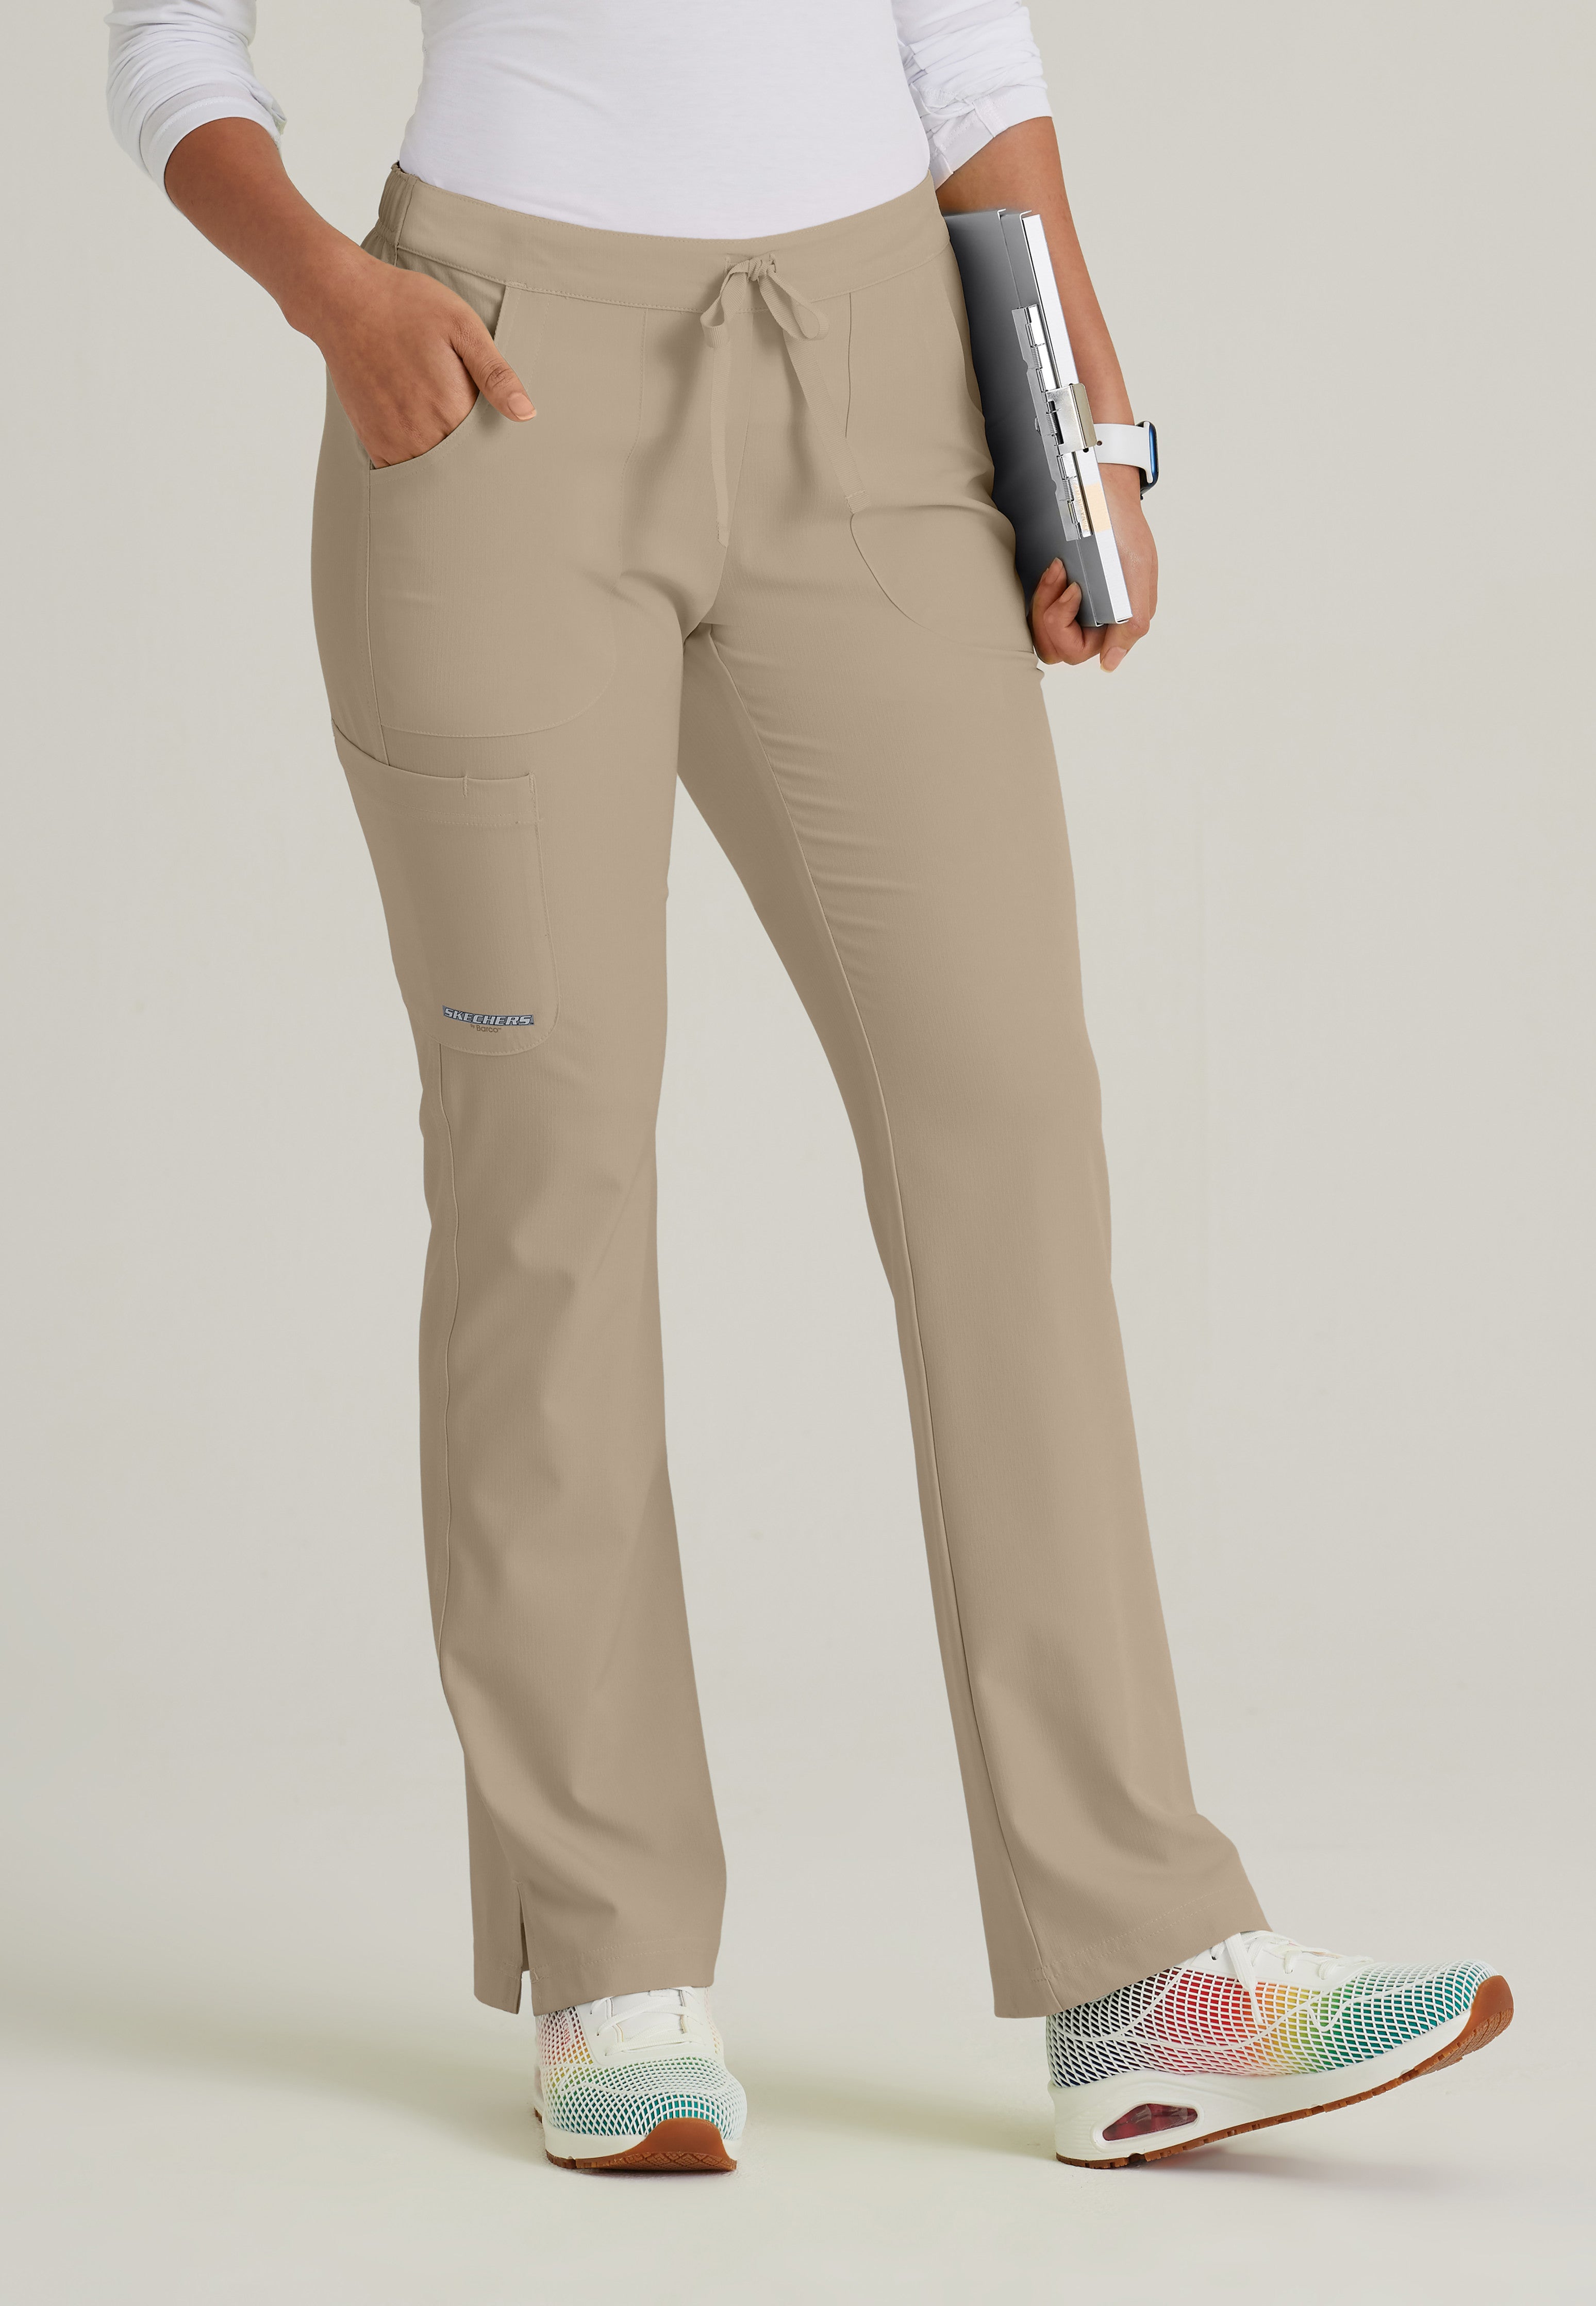 Skechers 3-Pocket Flat Front Reliance Scrub Pant for Women